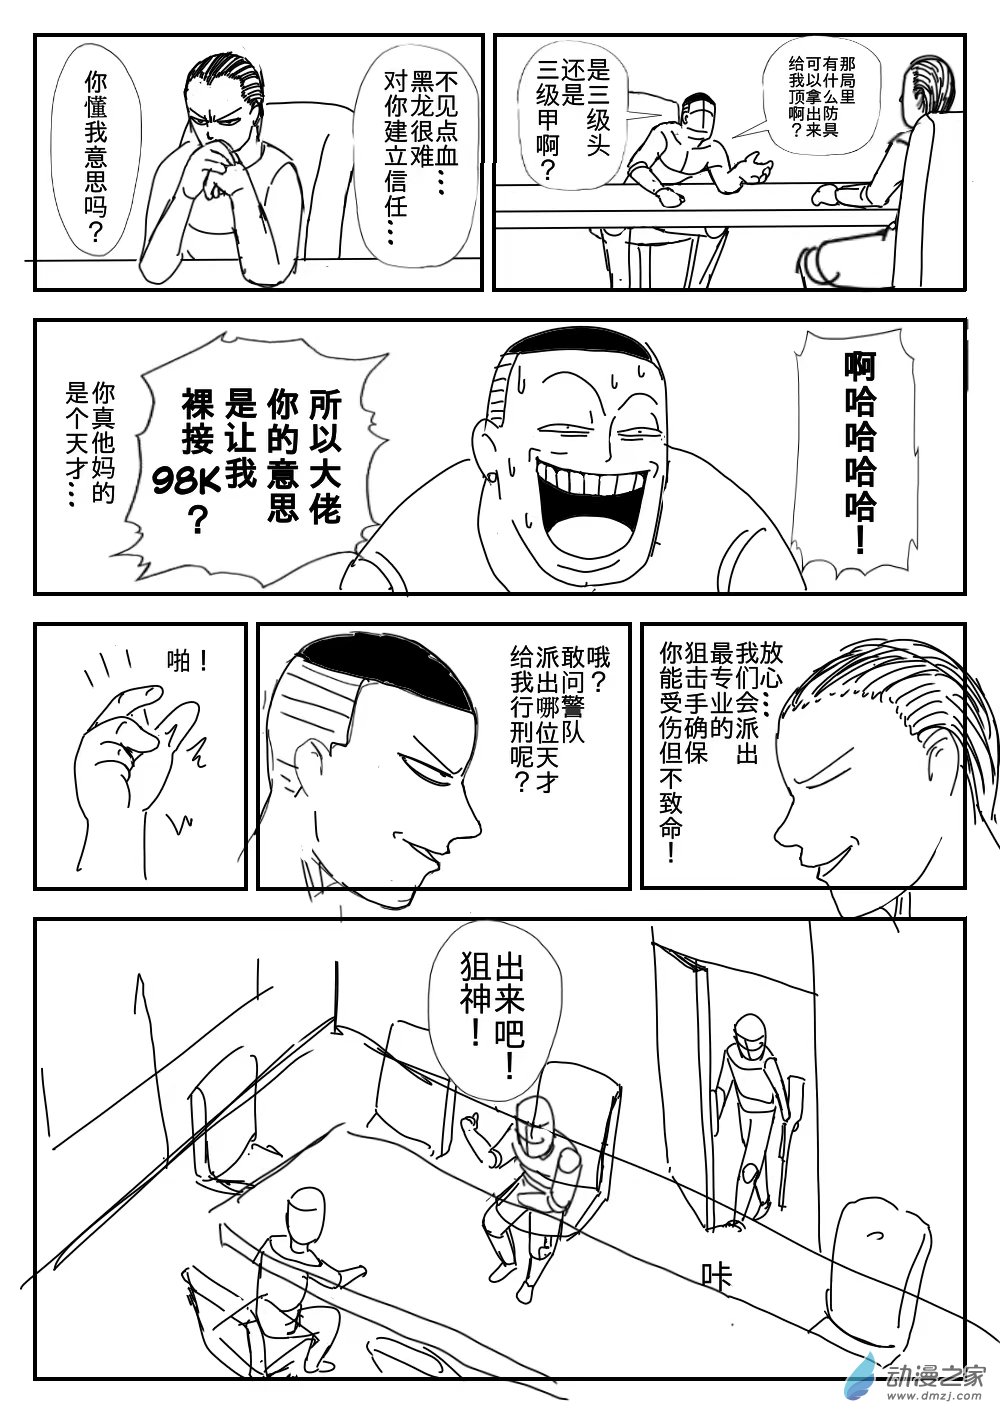 K神的短篇漫畫集 - 01 臥底阿潮 - 5